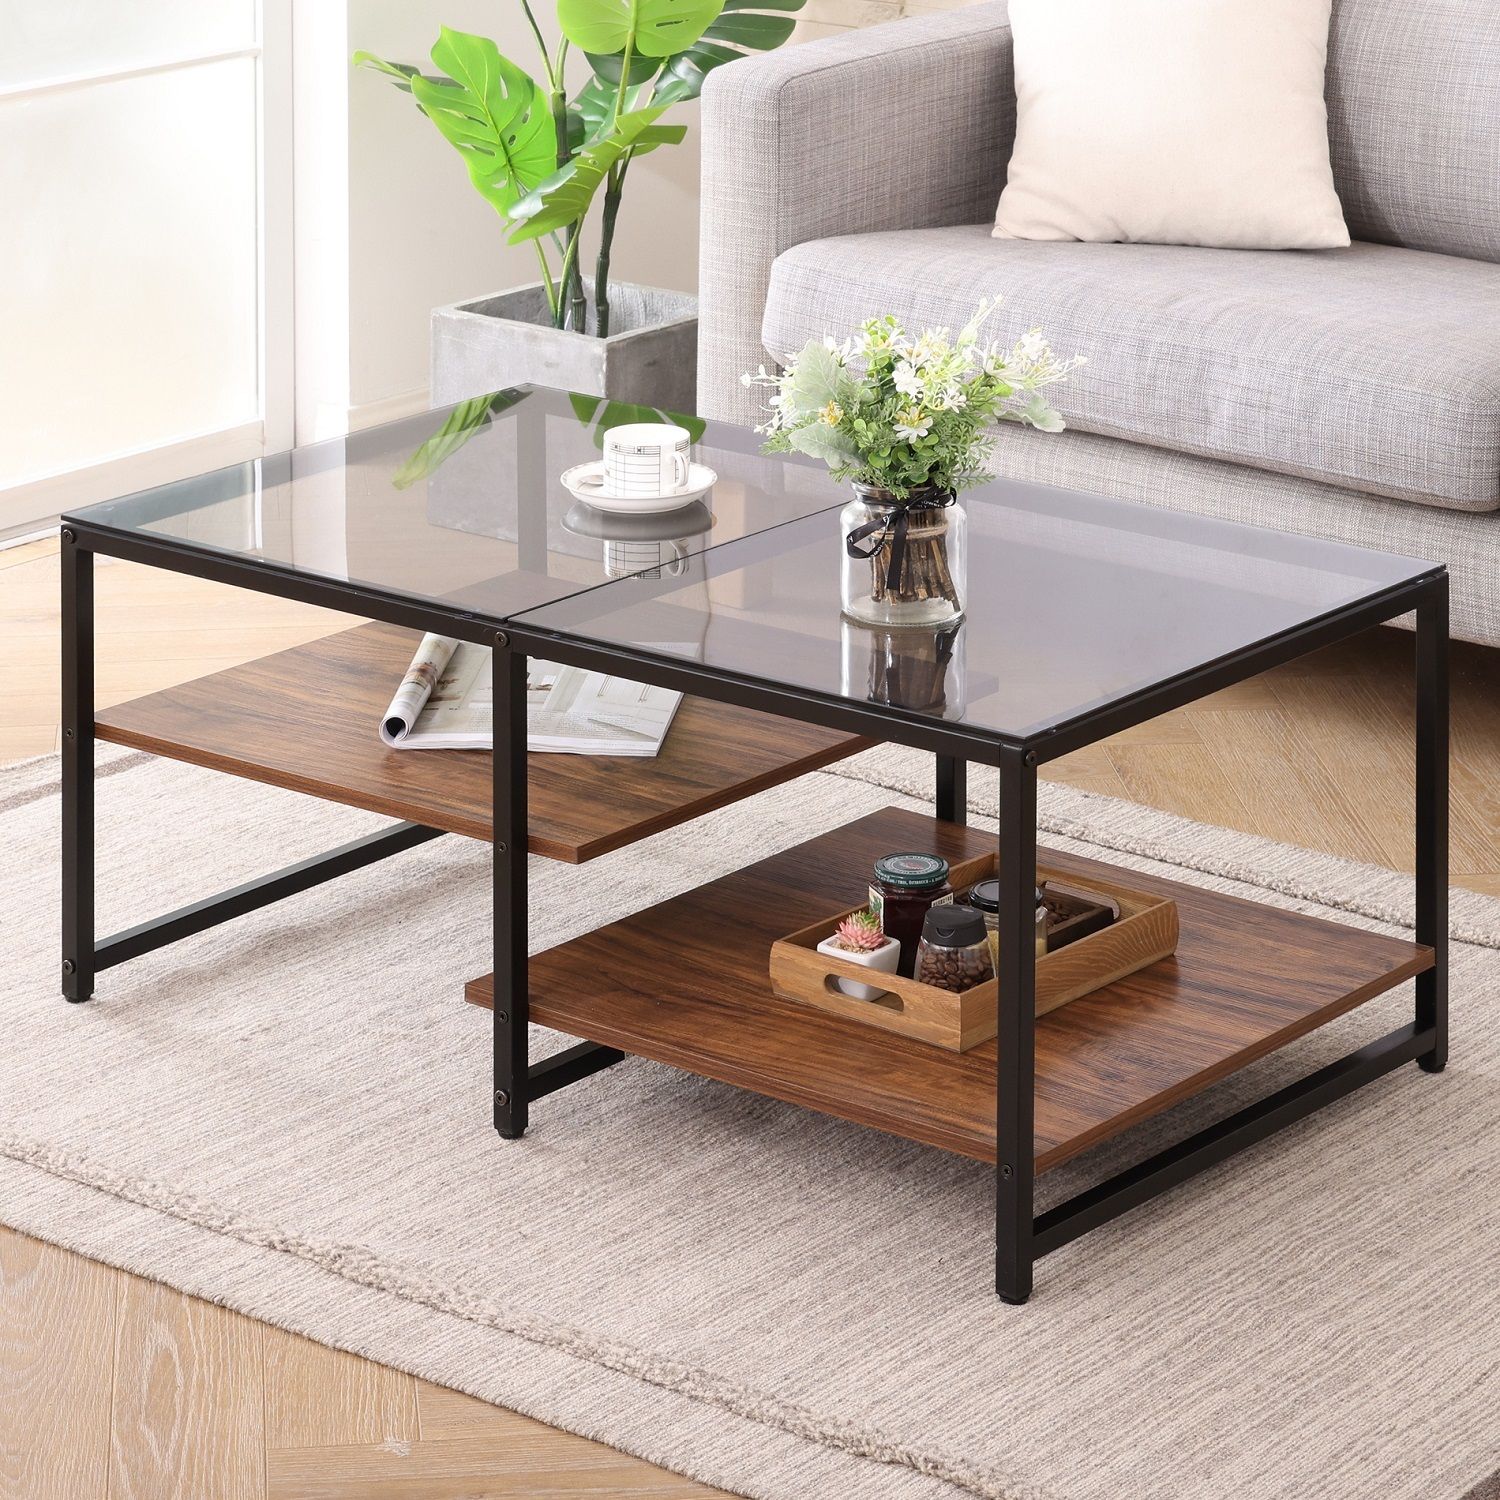 Homooi Glass Coffee Tables With Storage Shelves For Living Room, Retangle,   (View 4 of 15)